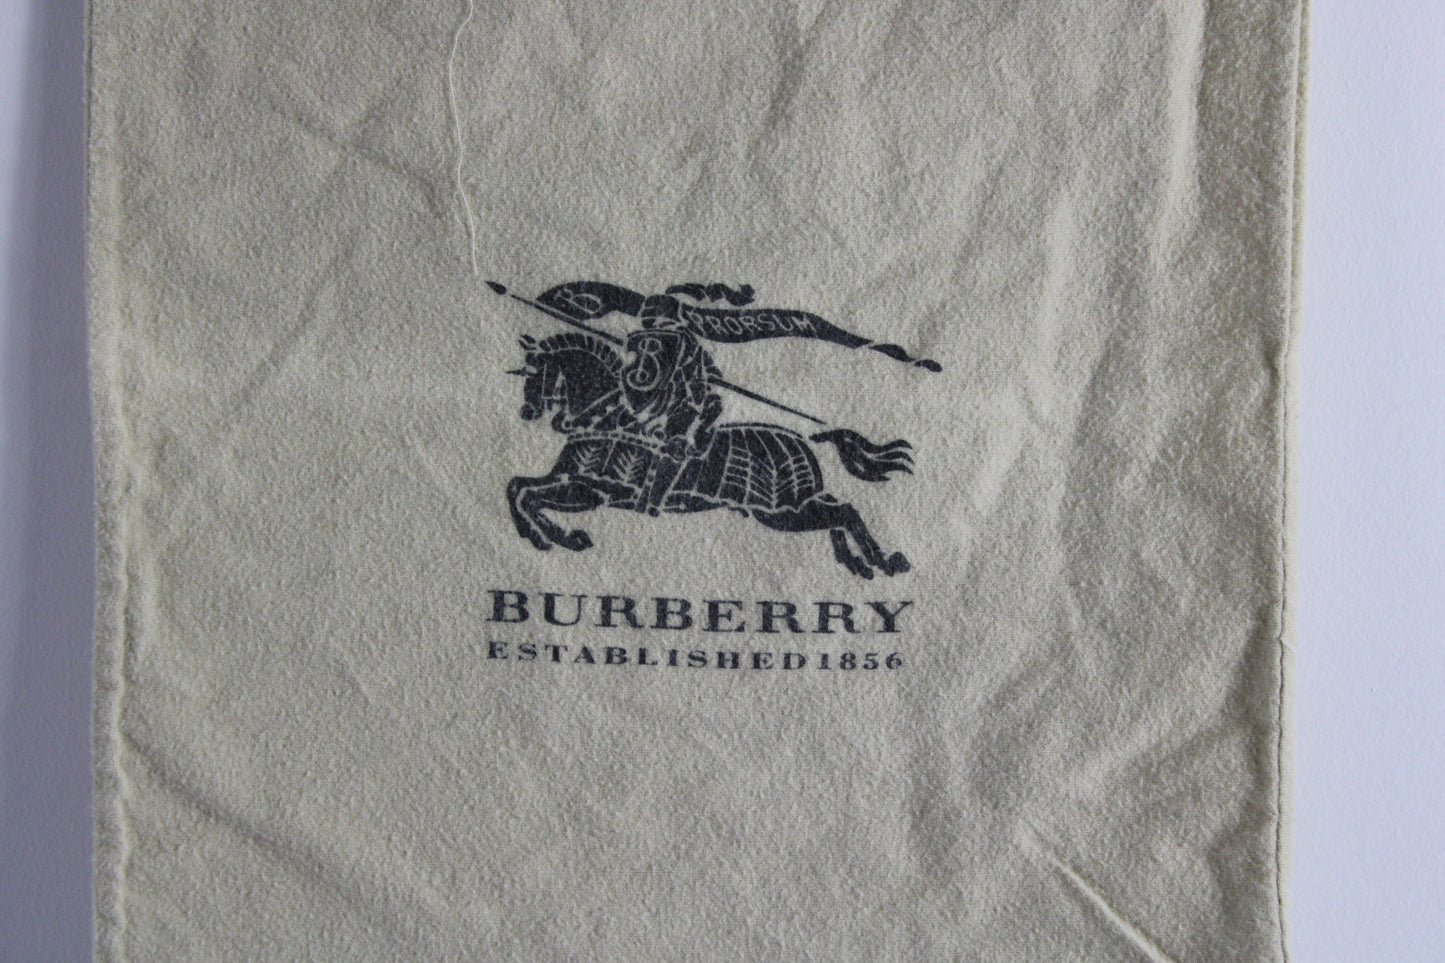 Burberry Dust Bag